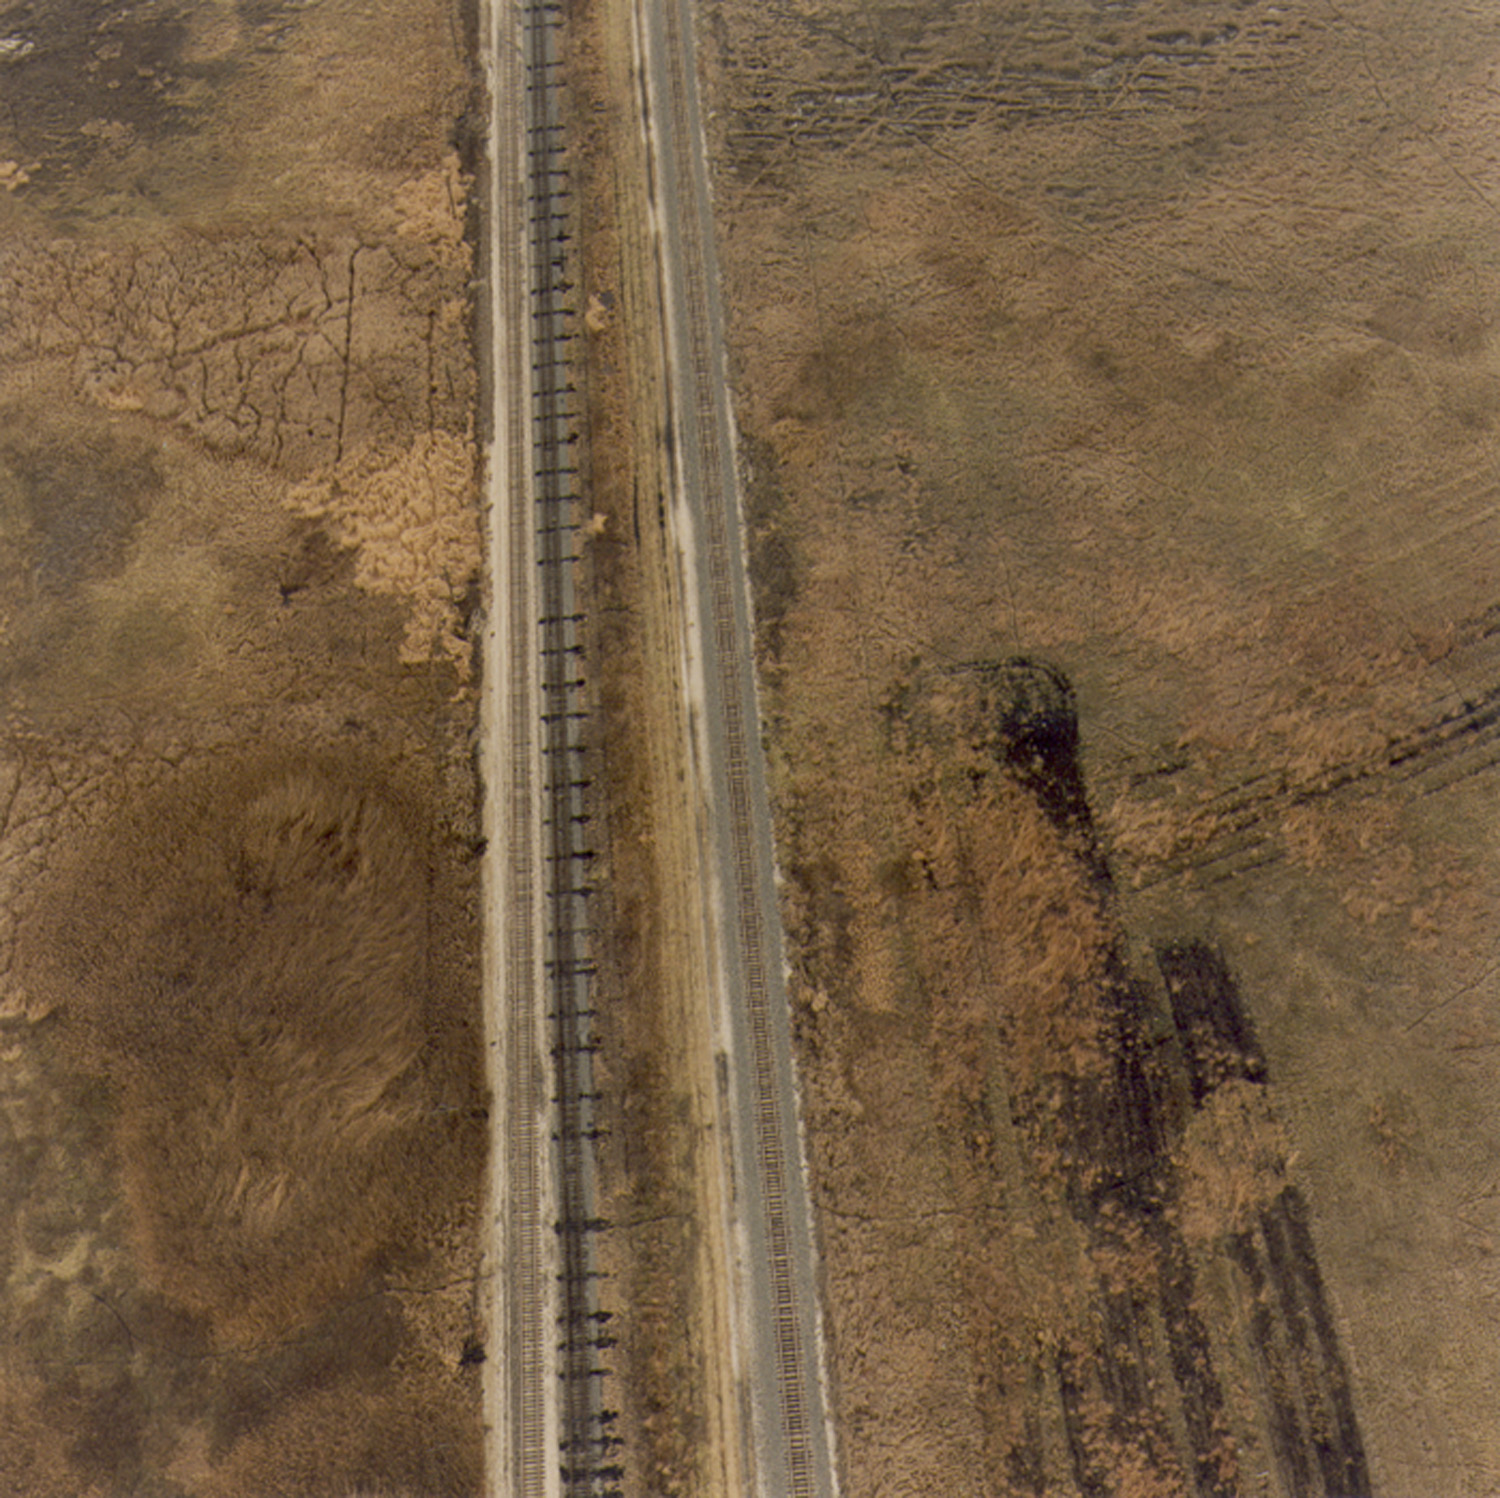 Railroad tracks next to Drummond Prairie, November 25, 1996